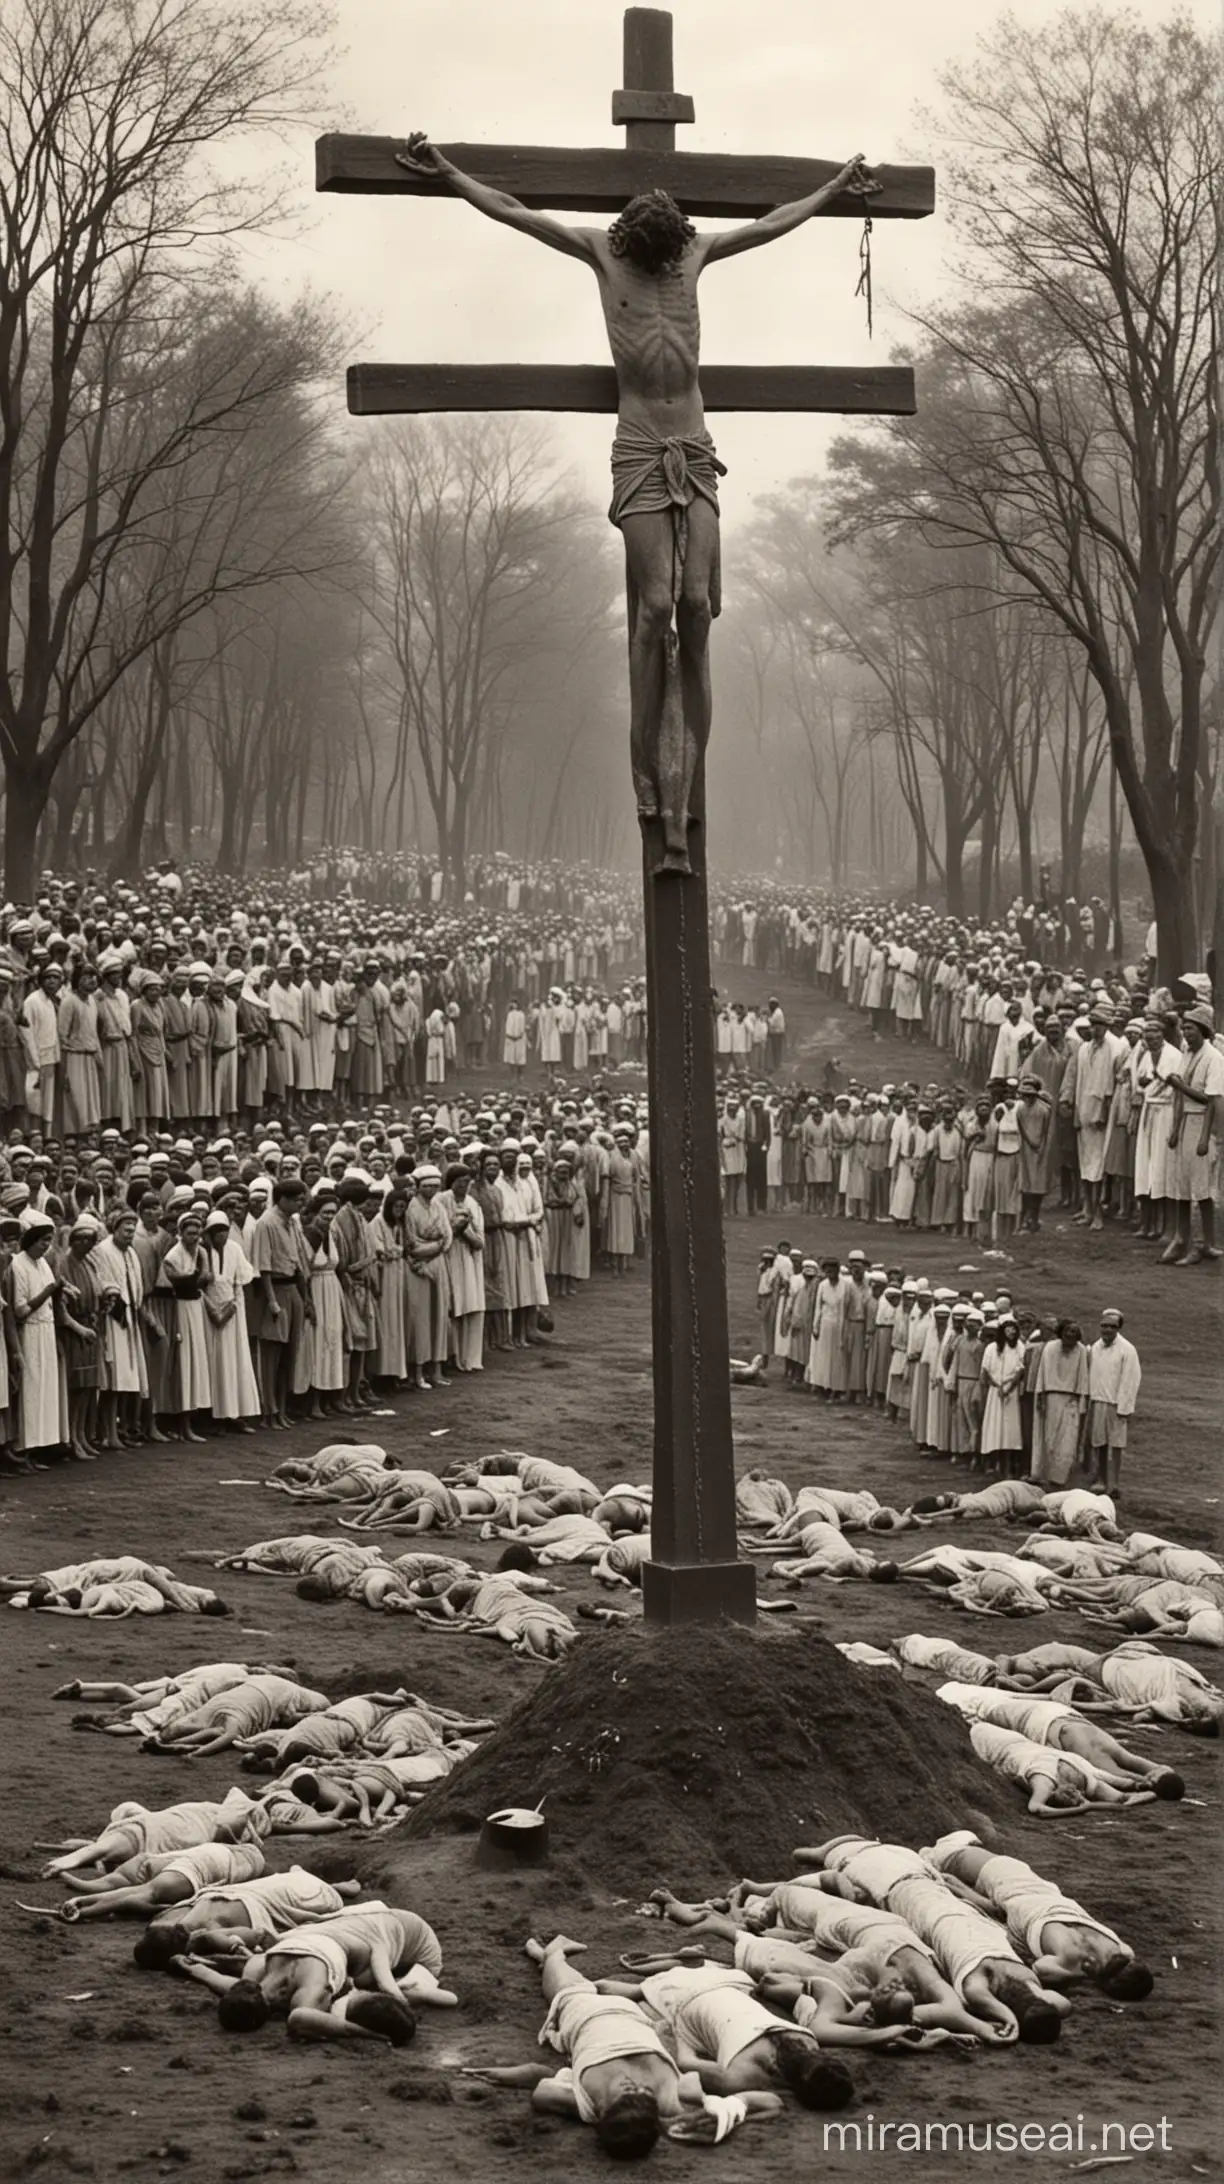 Ritualistic Human Sacrifice Ceremony in 1950